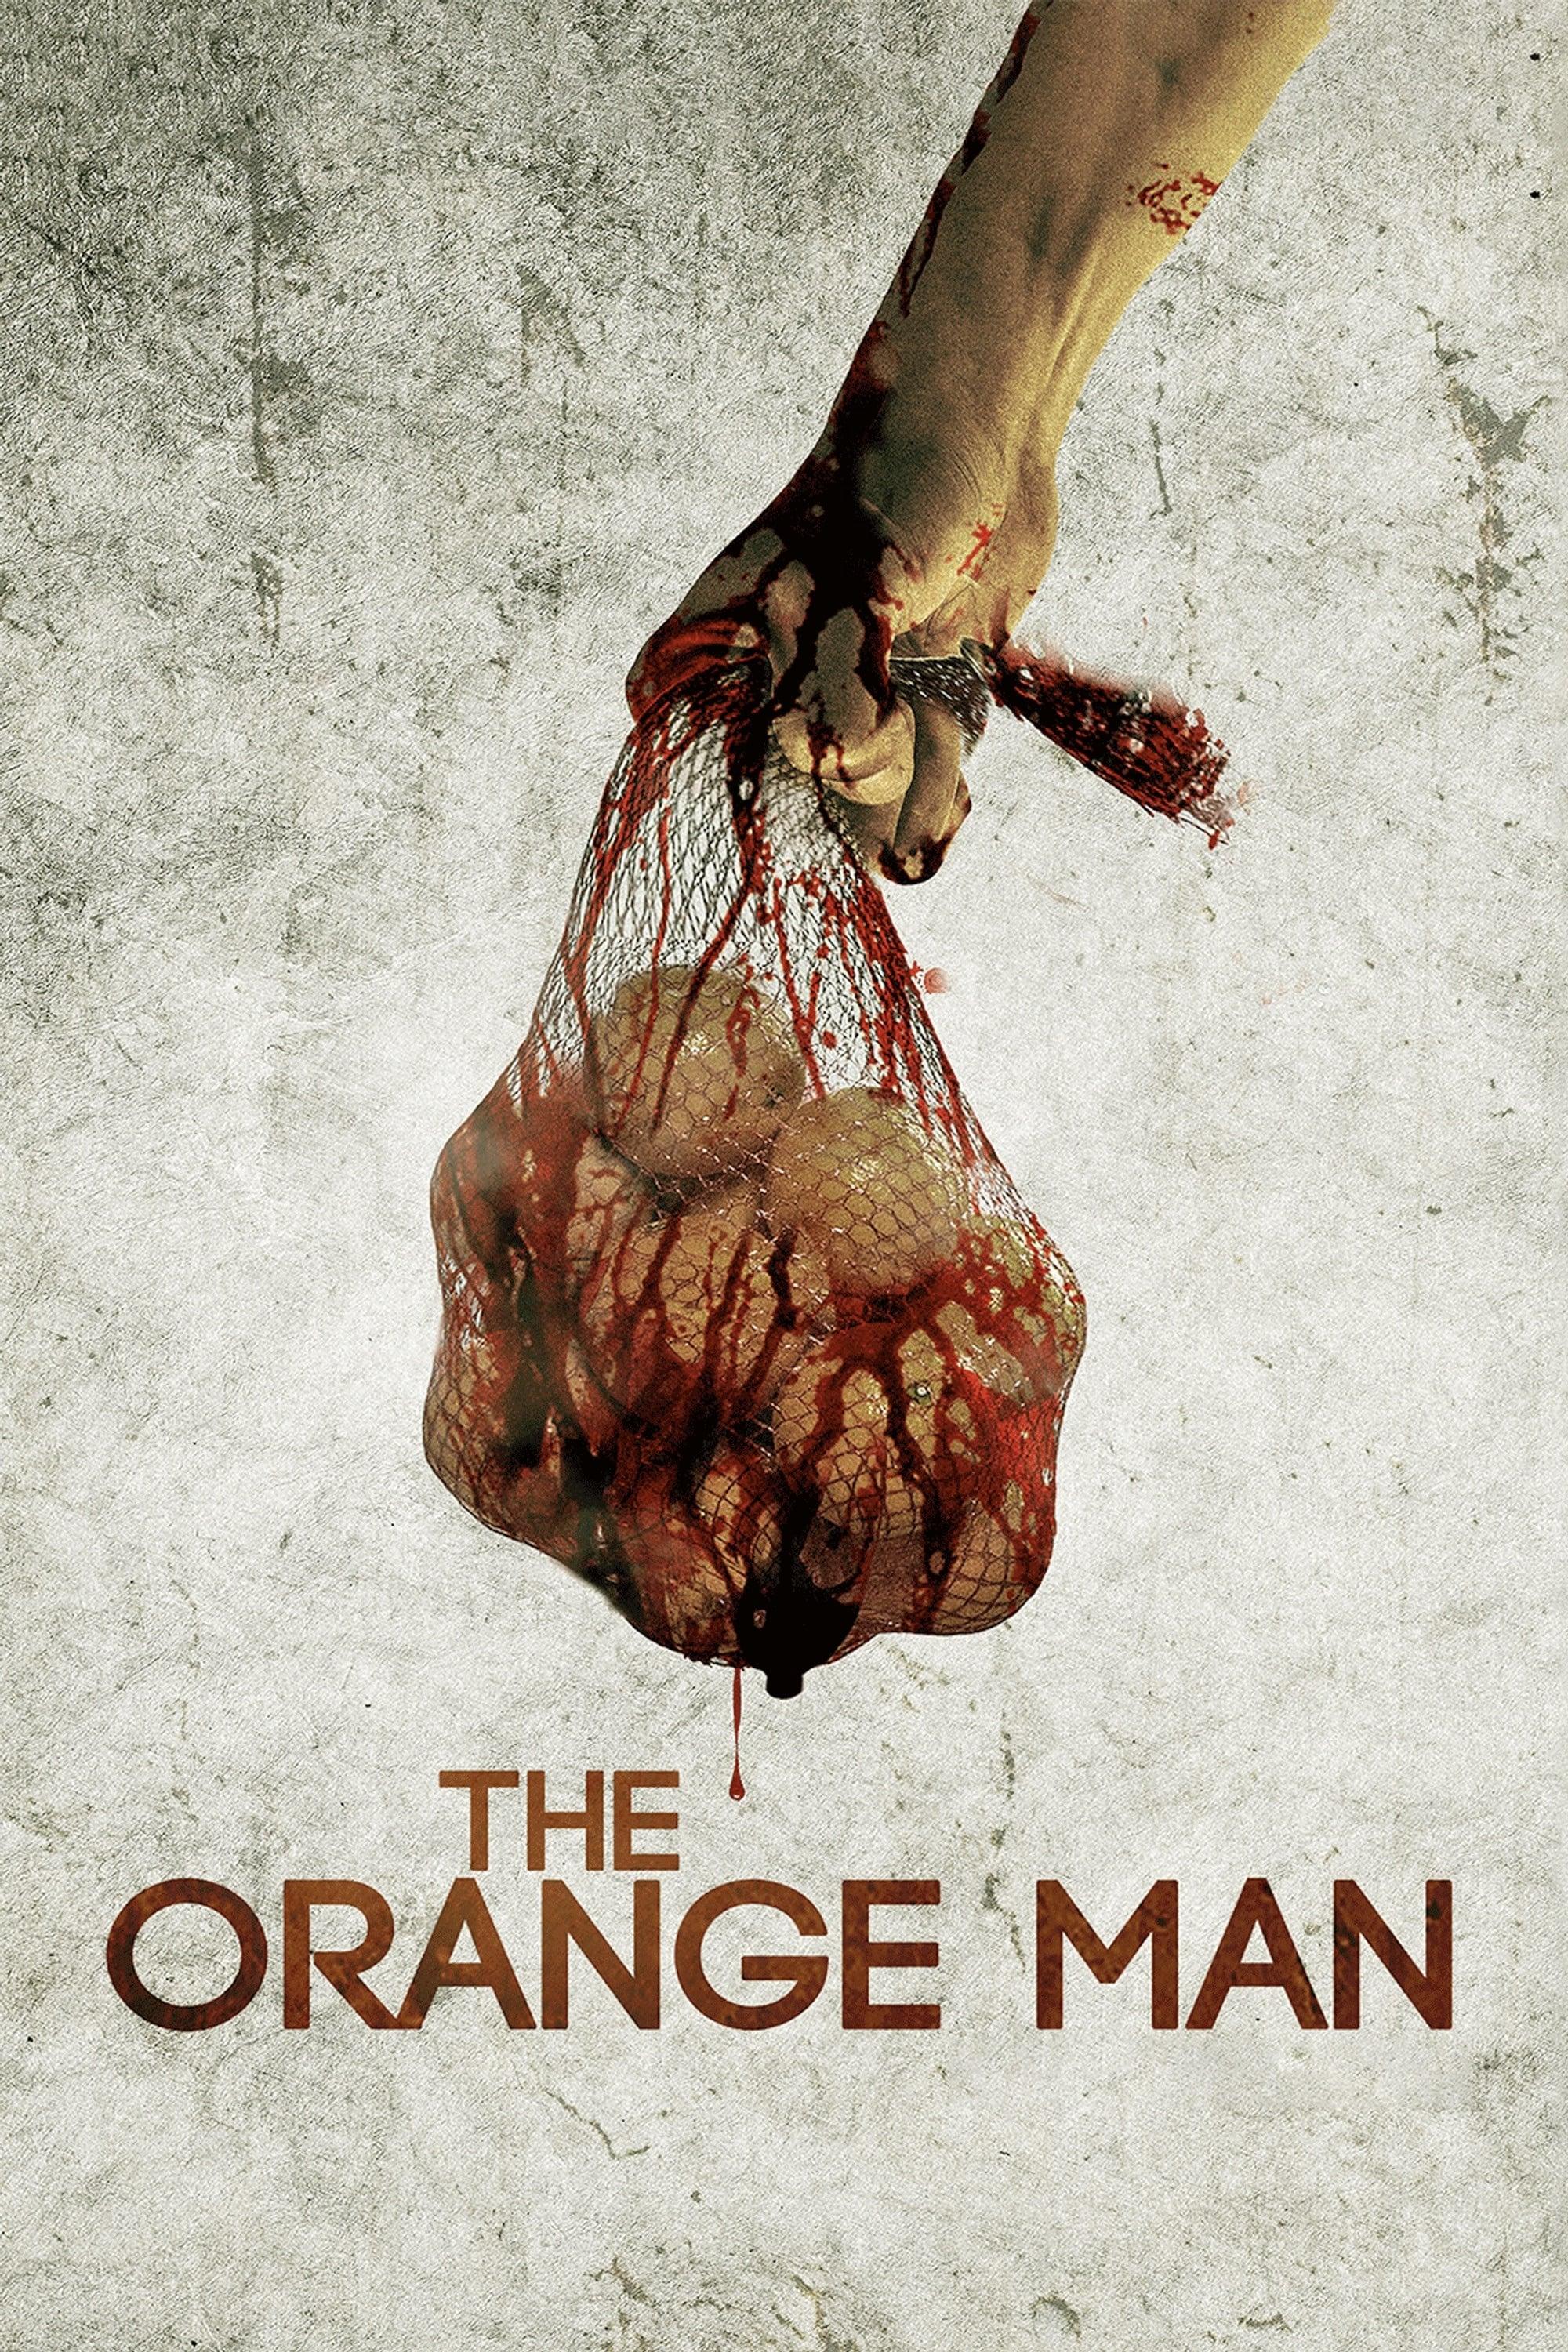 The Orange Man poster